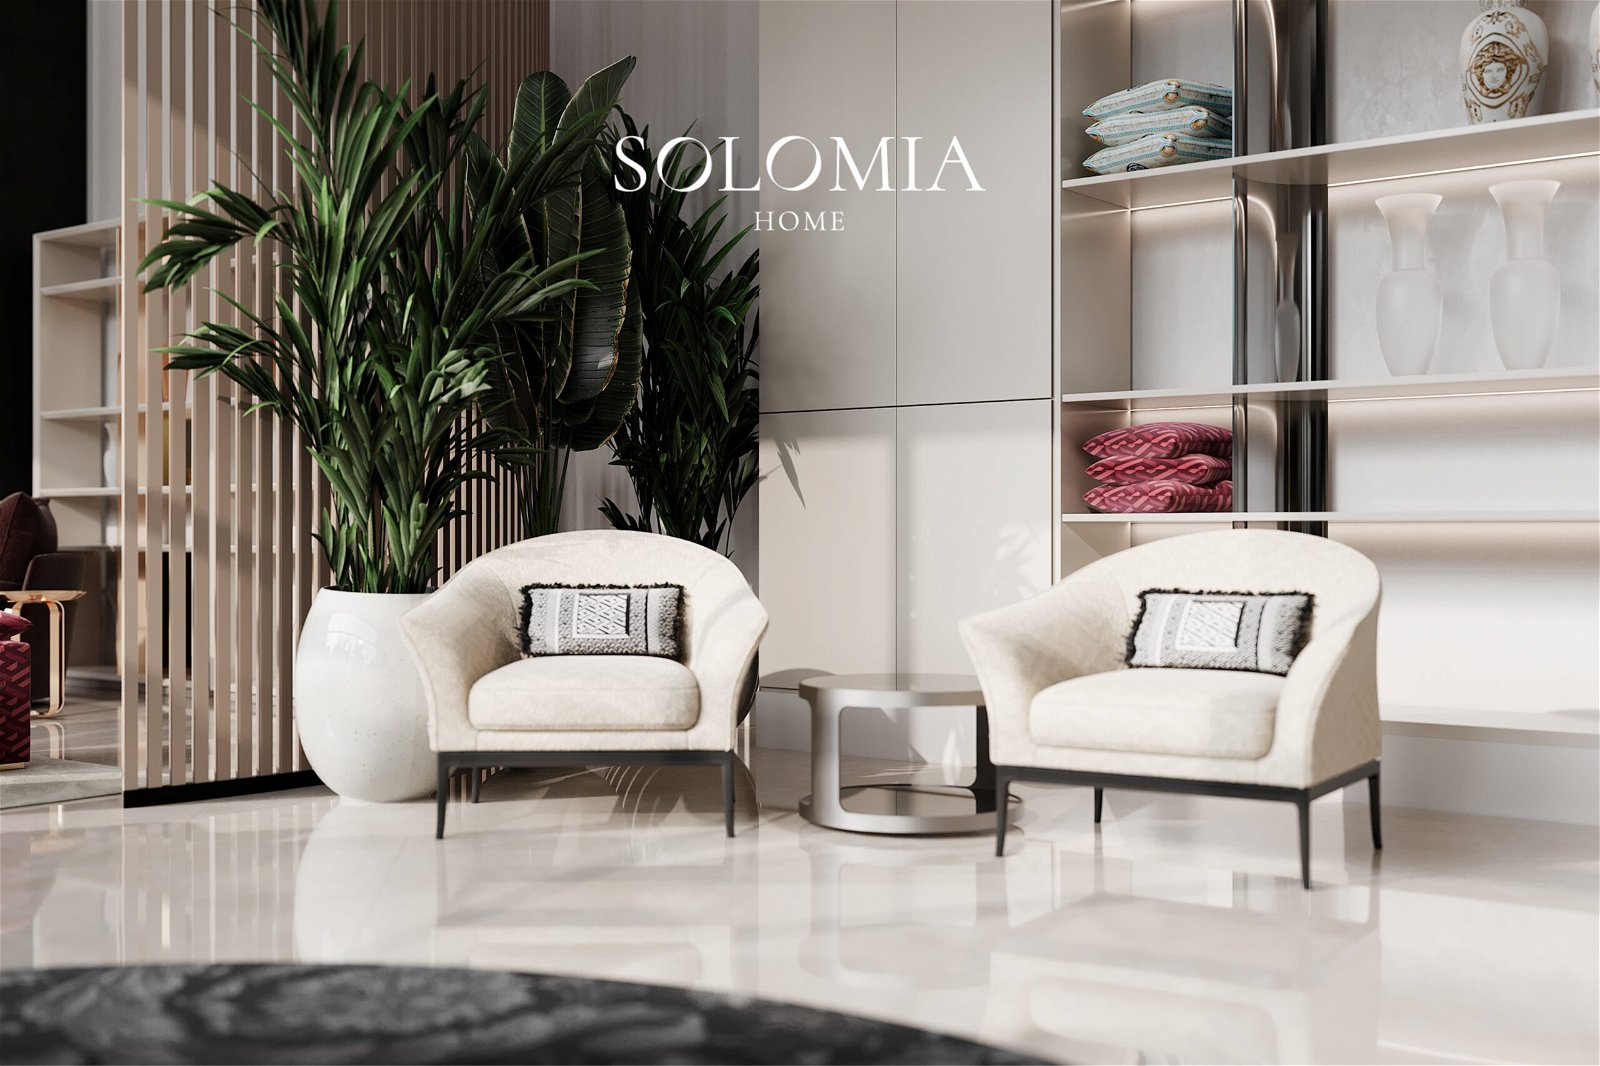 Solomia Home trade hall design